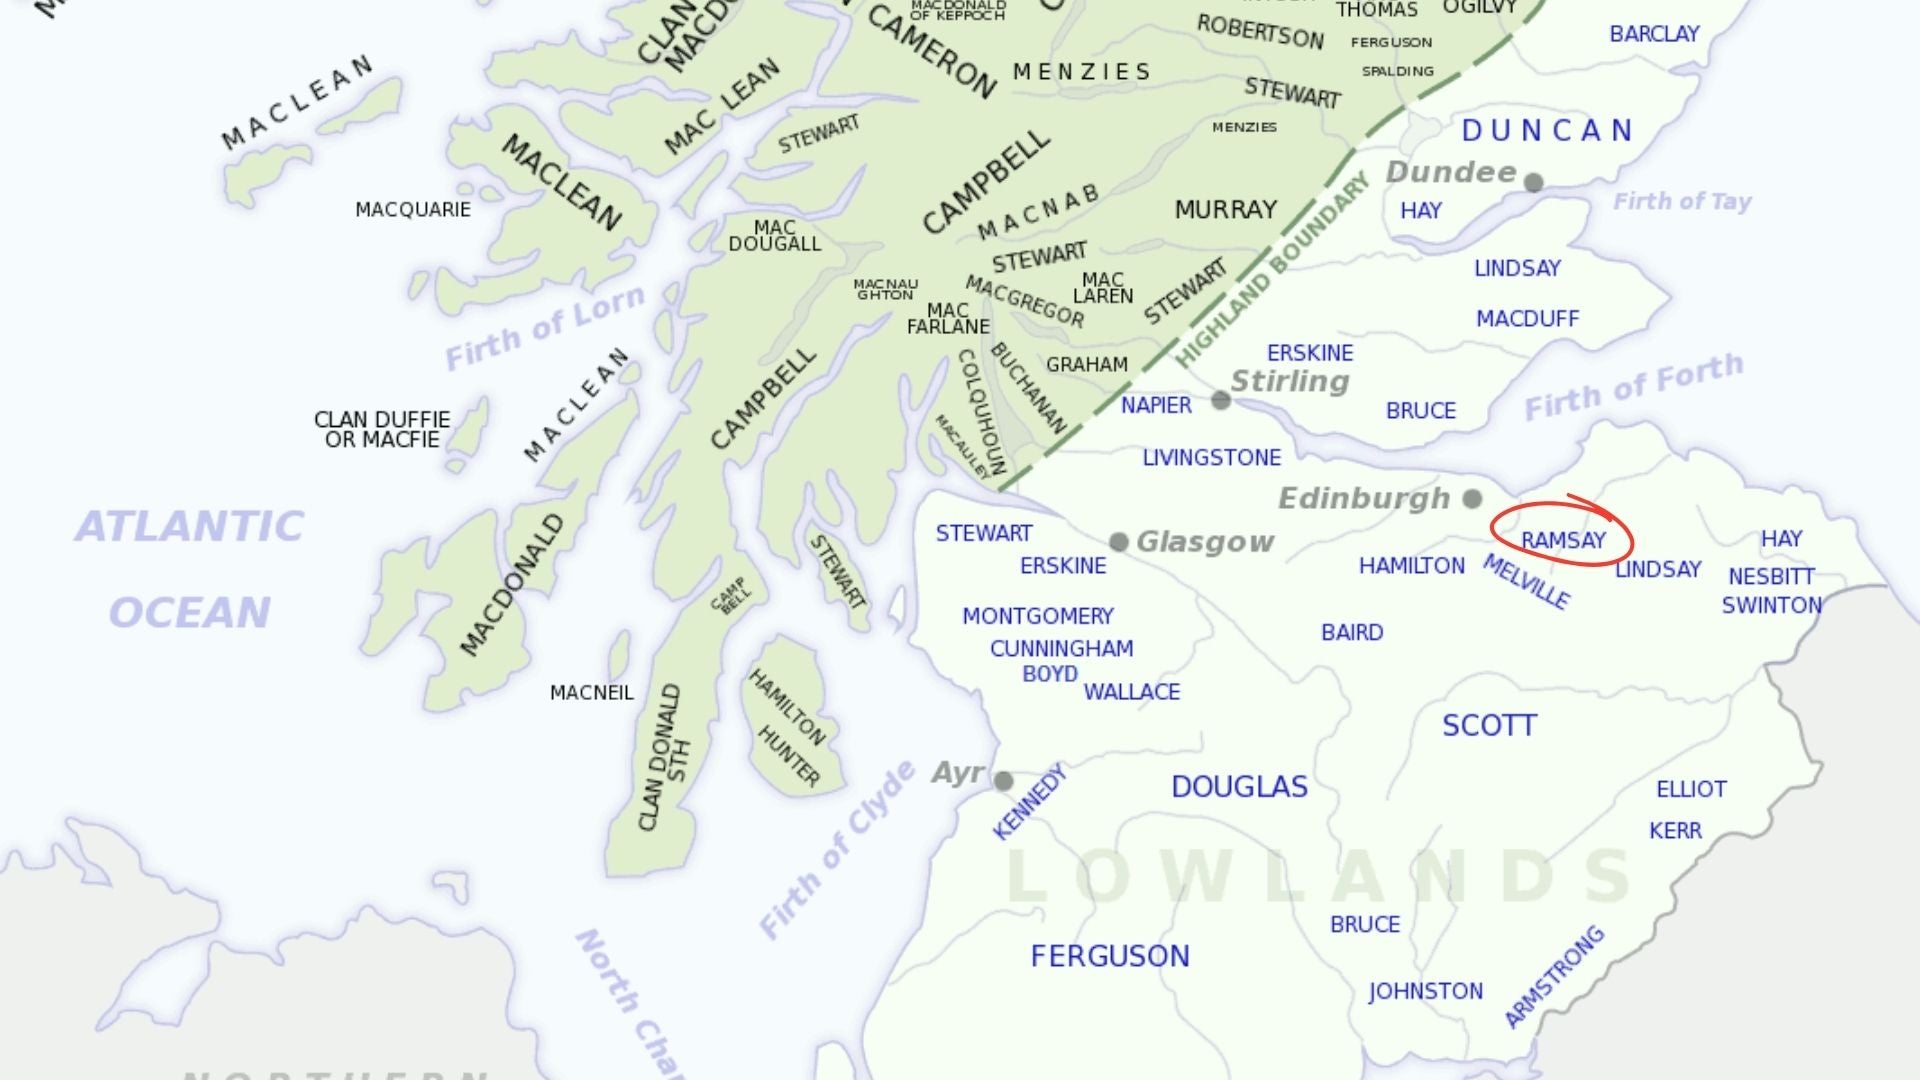 Ramsay Clan map